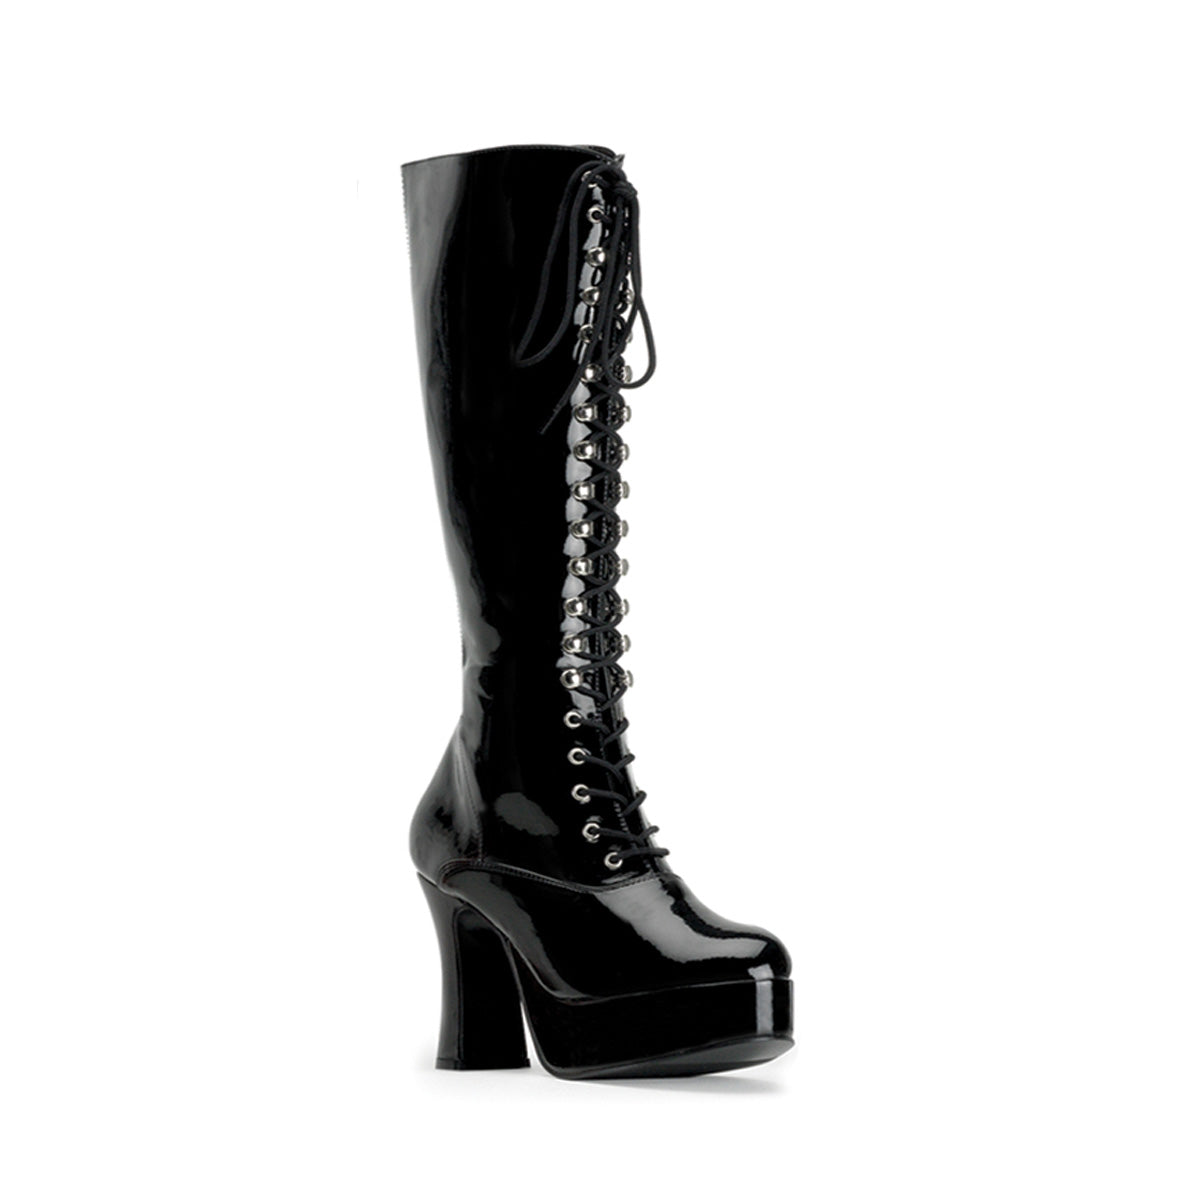 EXOTICA-2020 Pleasers Funtasma 4 Inch Heel Black Patent Women's Boots